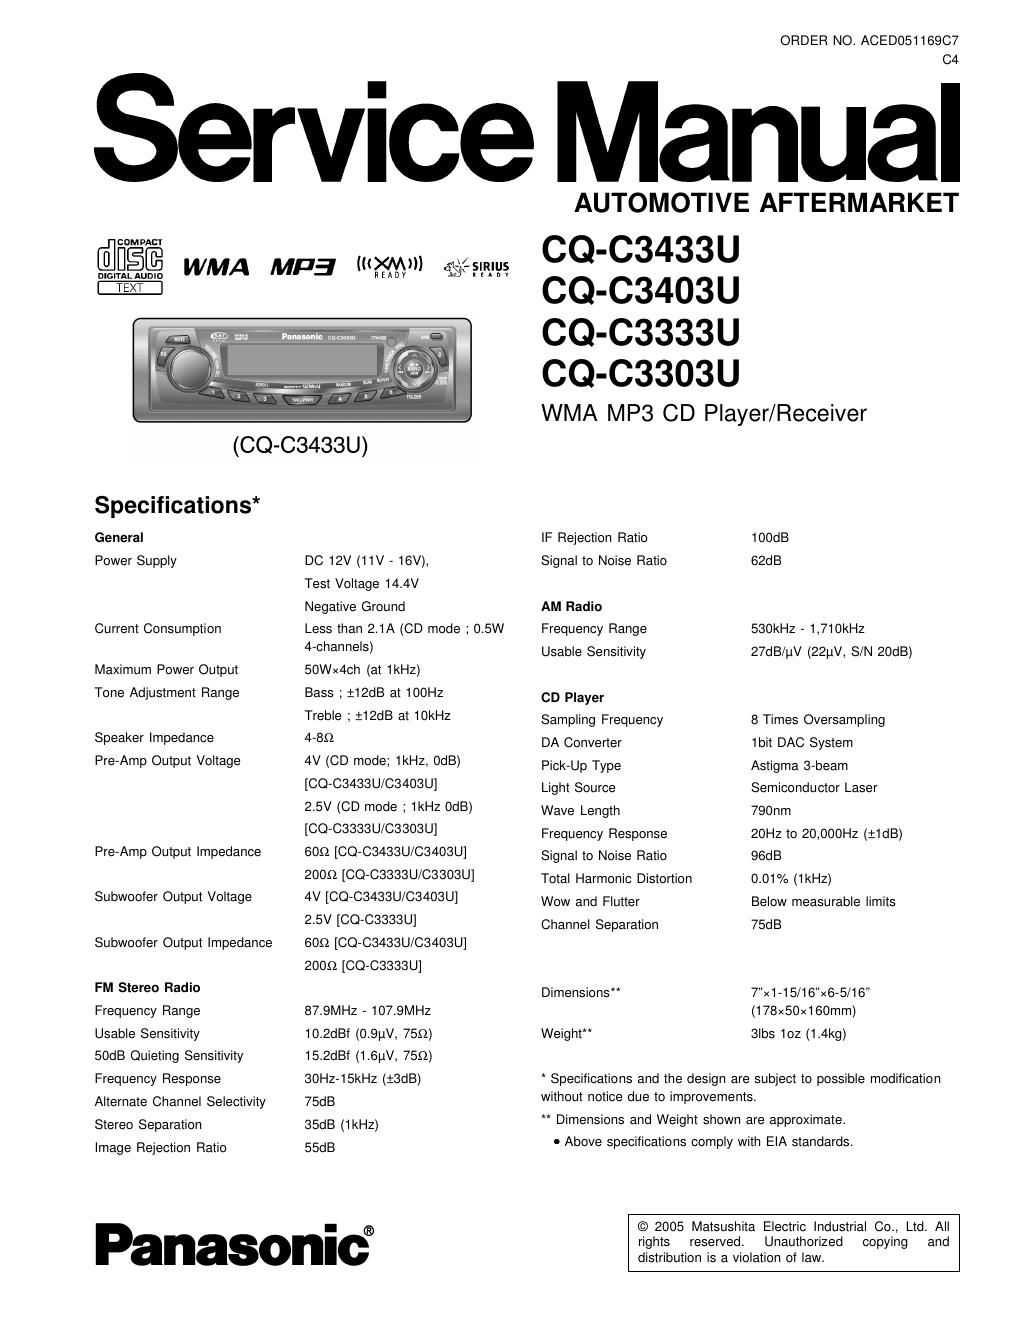 panasonic cq c 3333 u service manual